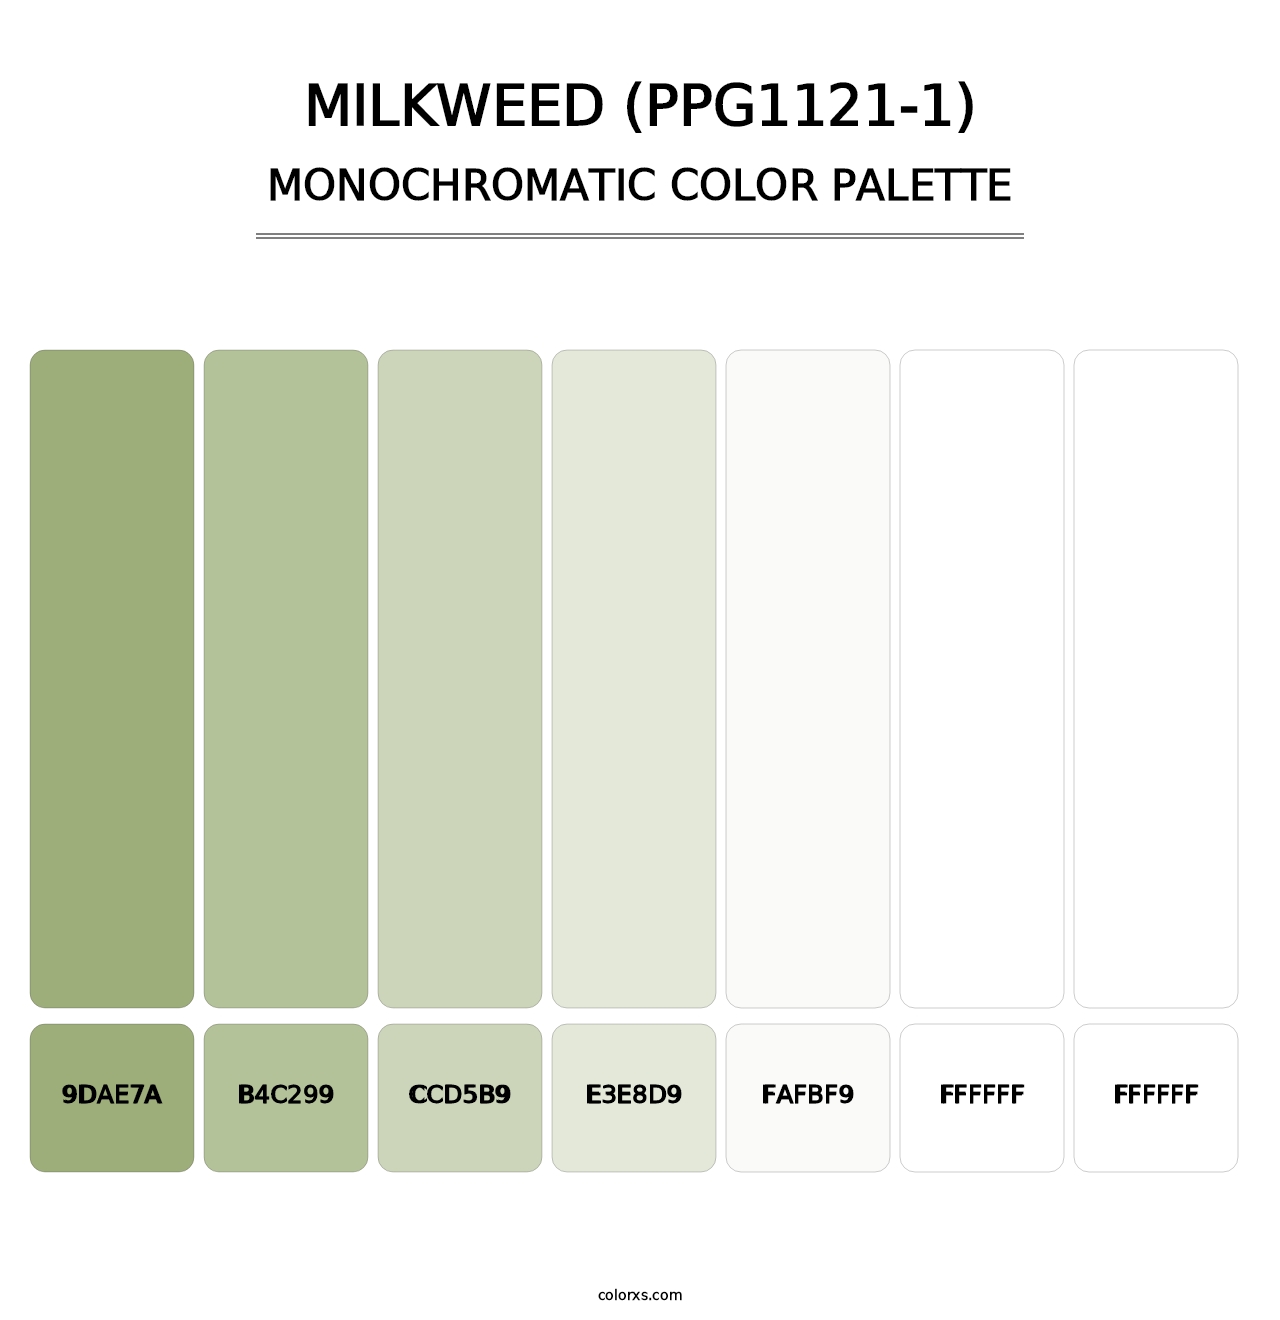 Milkweed (PPG1121-1) - Monochromatic Color Palette